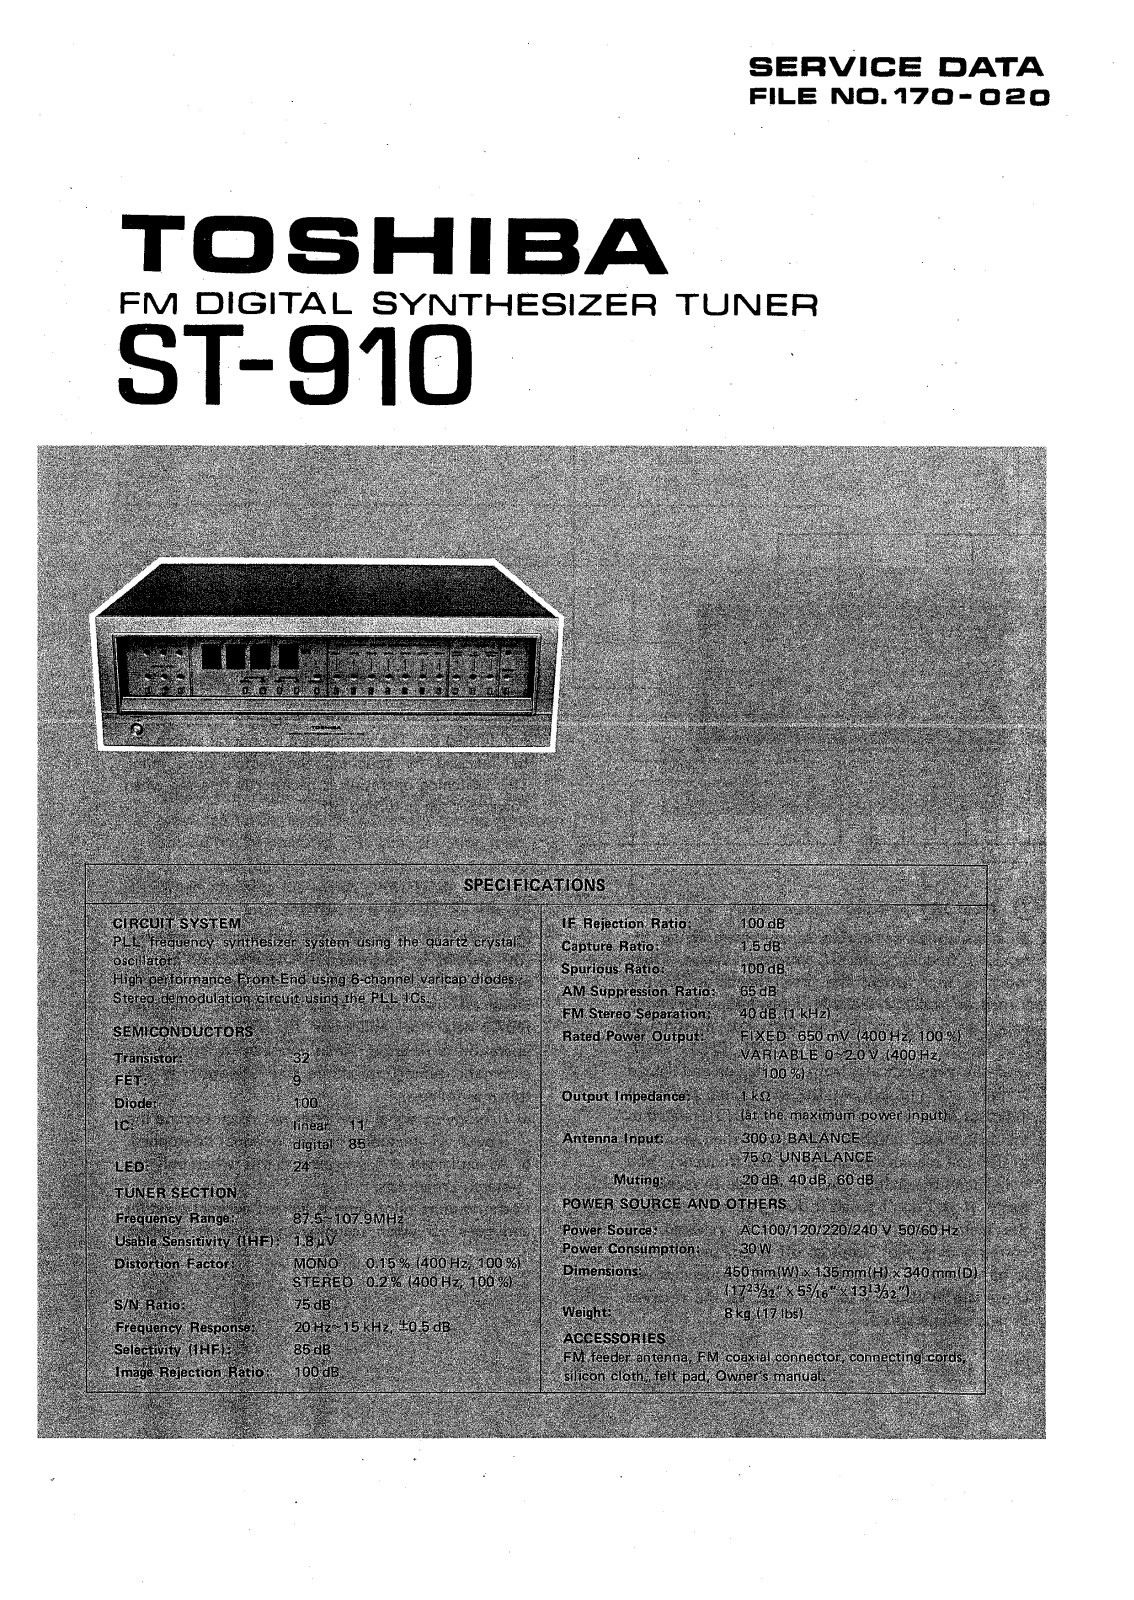 Toshiba ST-910 Service manual